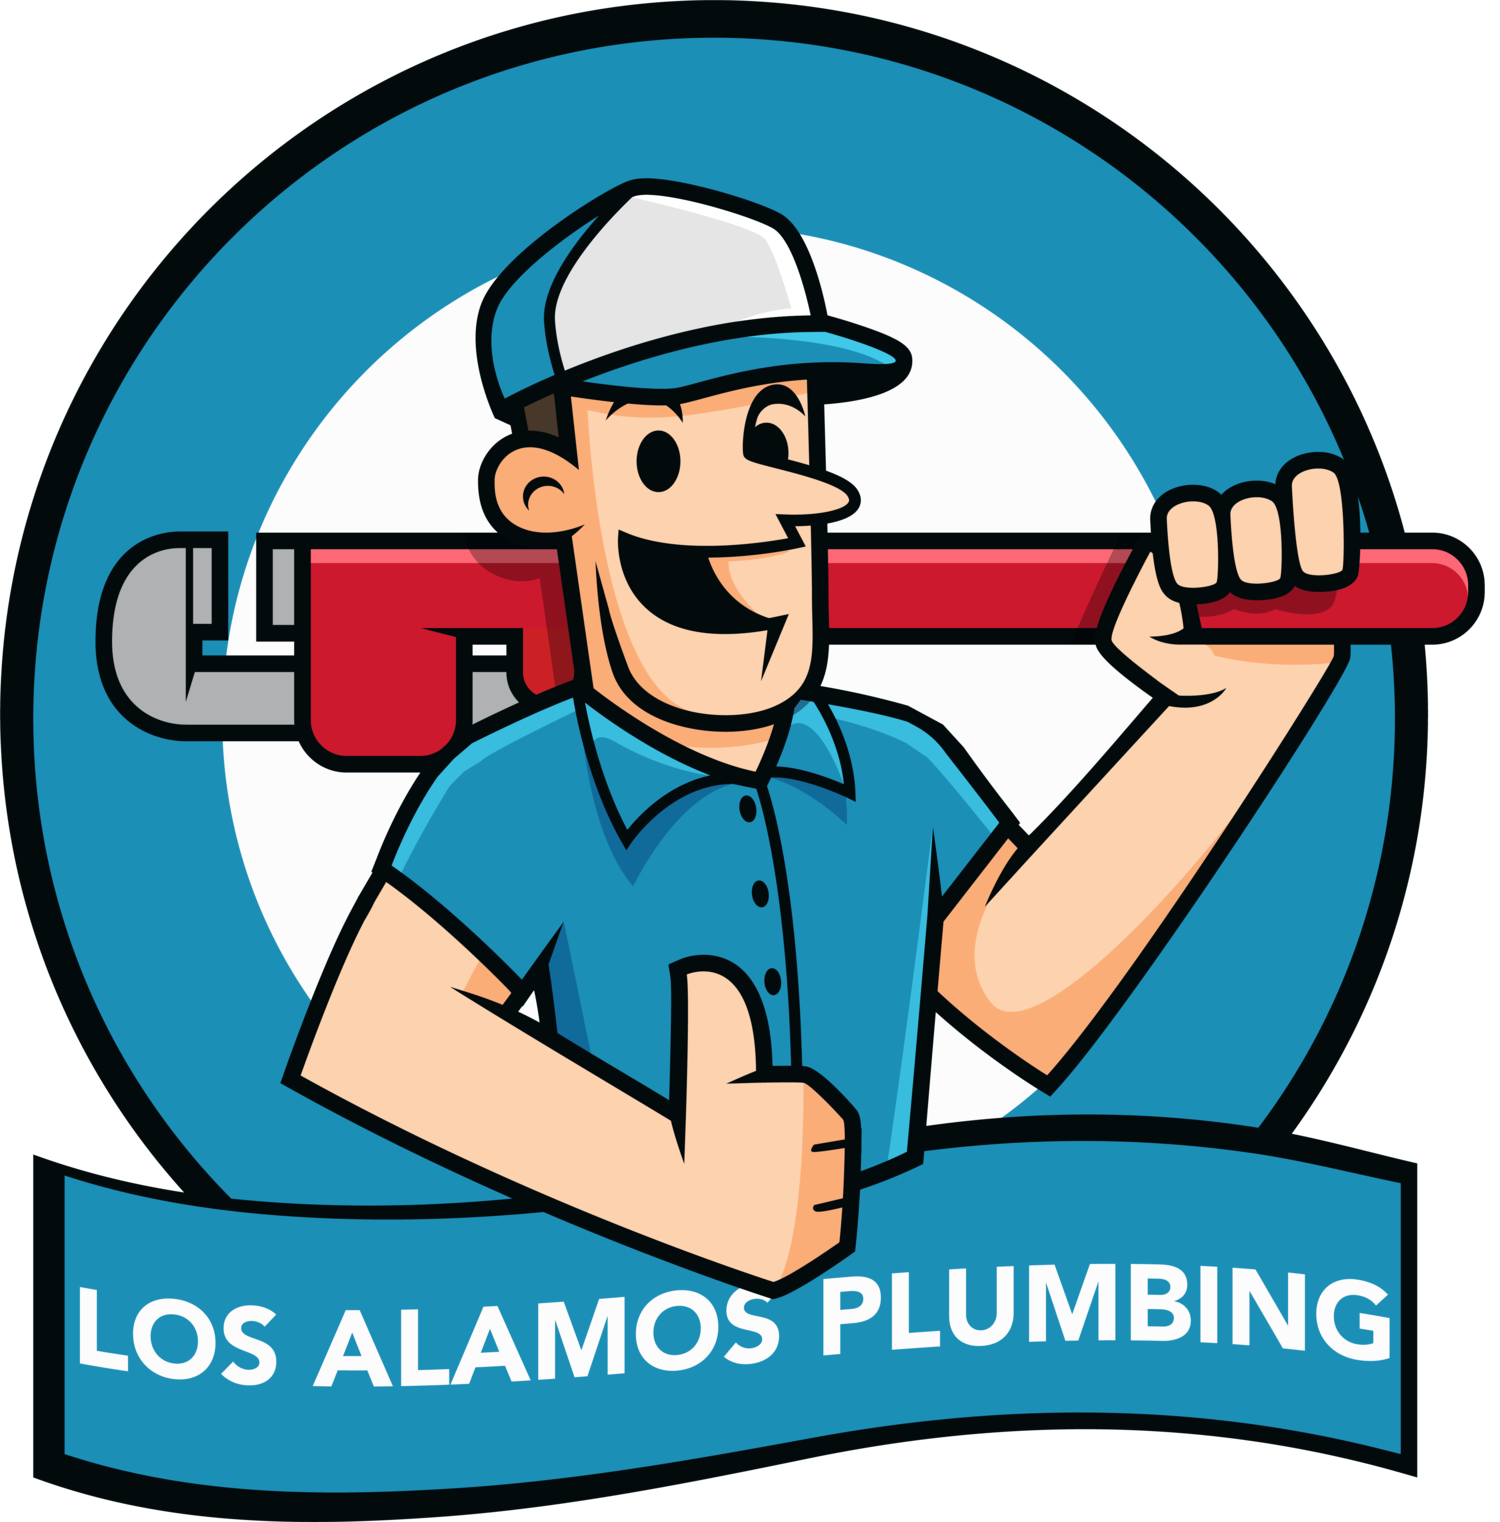 Los Alamos Plumbing